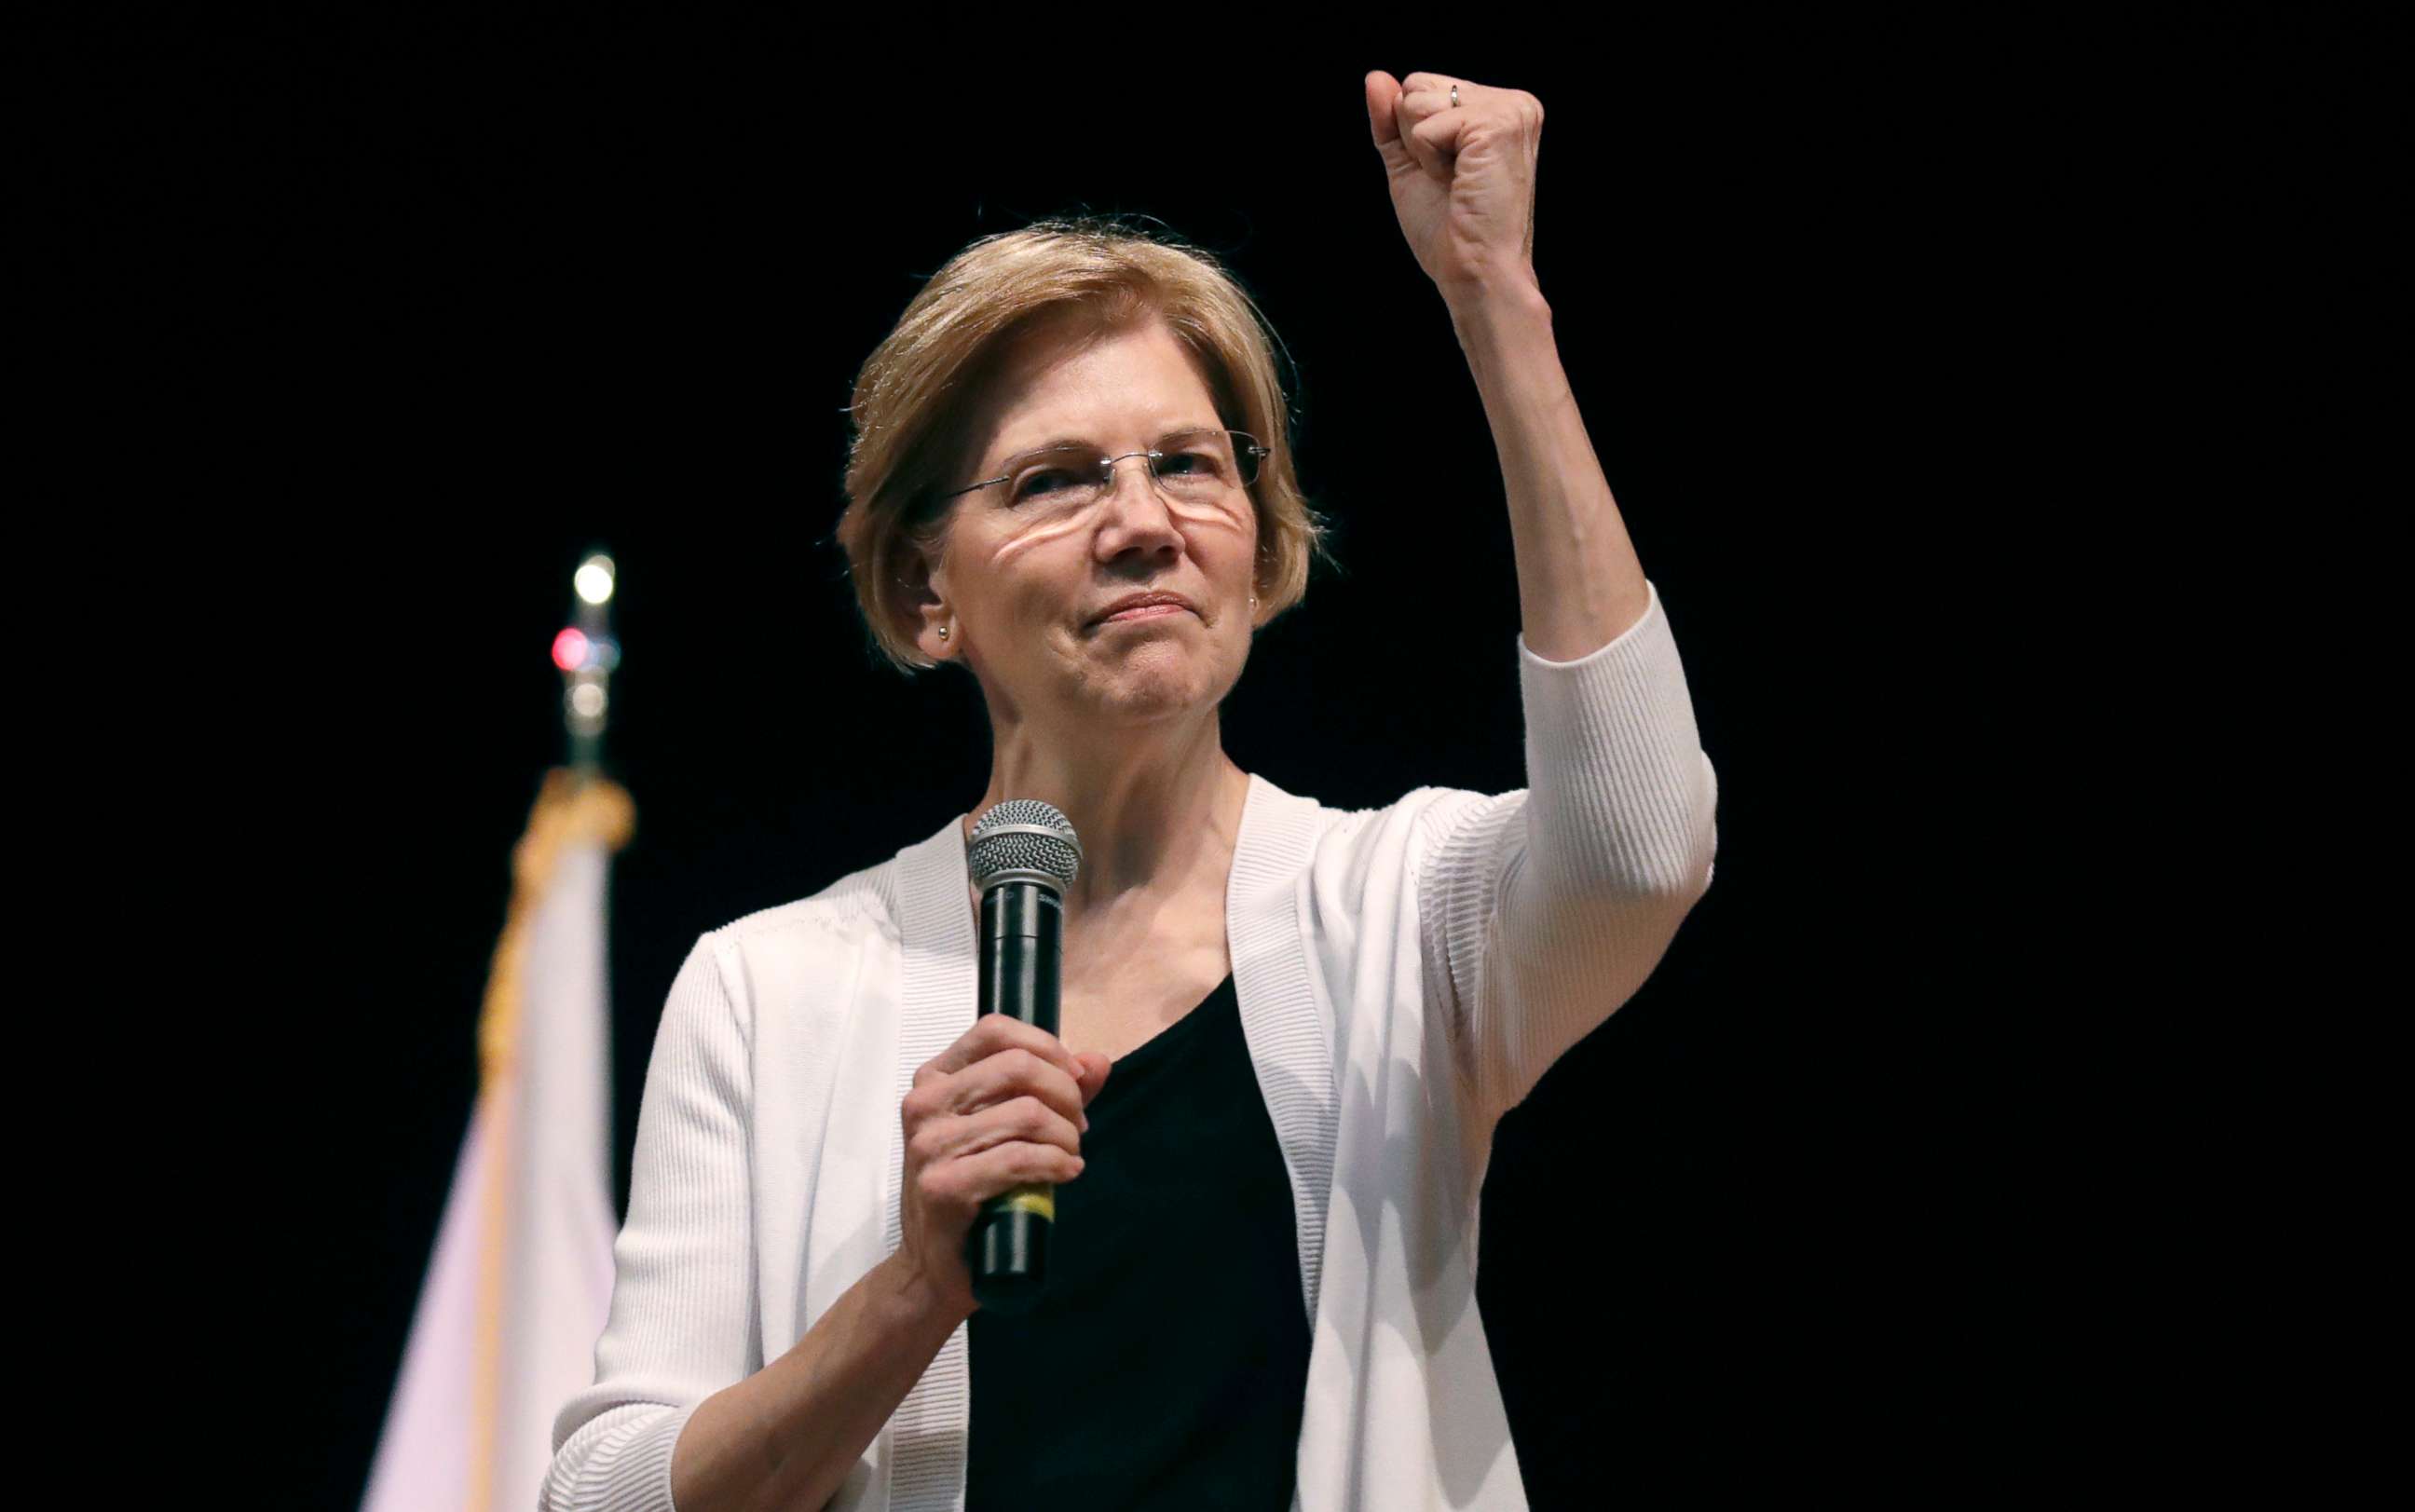 PHOTO: Sen. Elizabeth Warren gestures during a town hall style gathering in Woburn, Mass., Aug. 8, 2018.